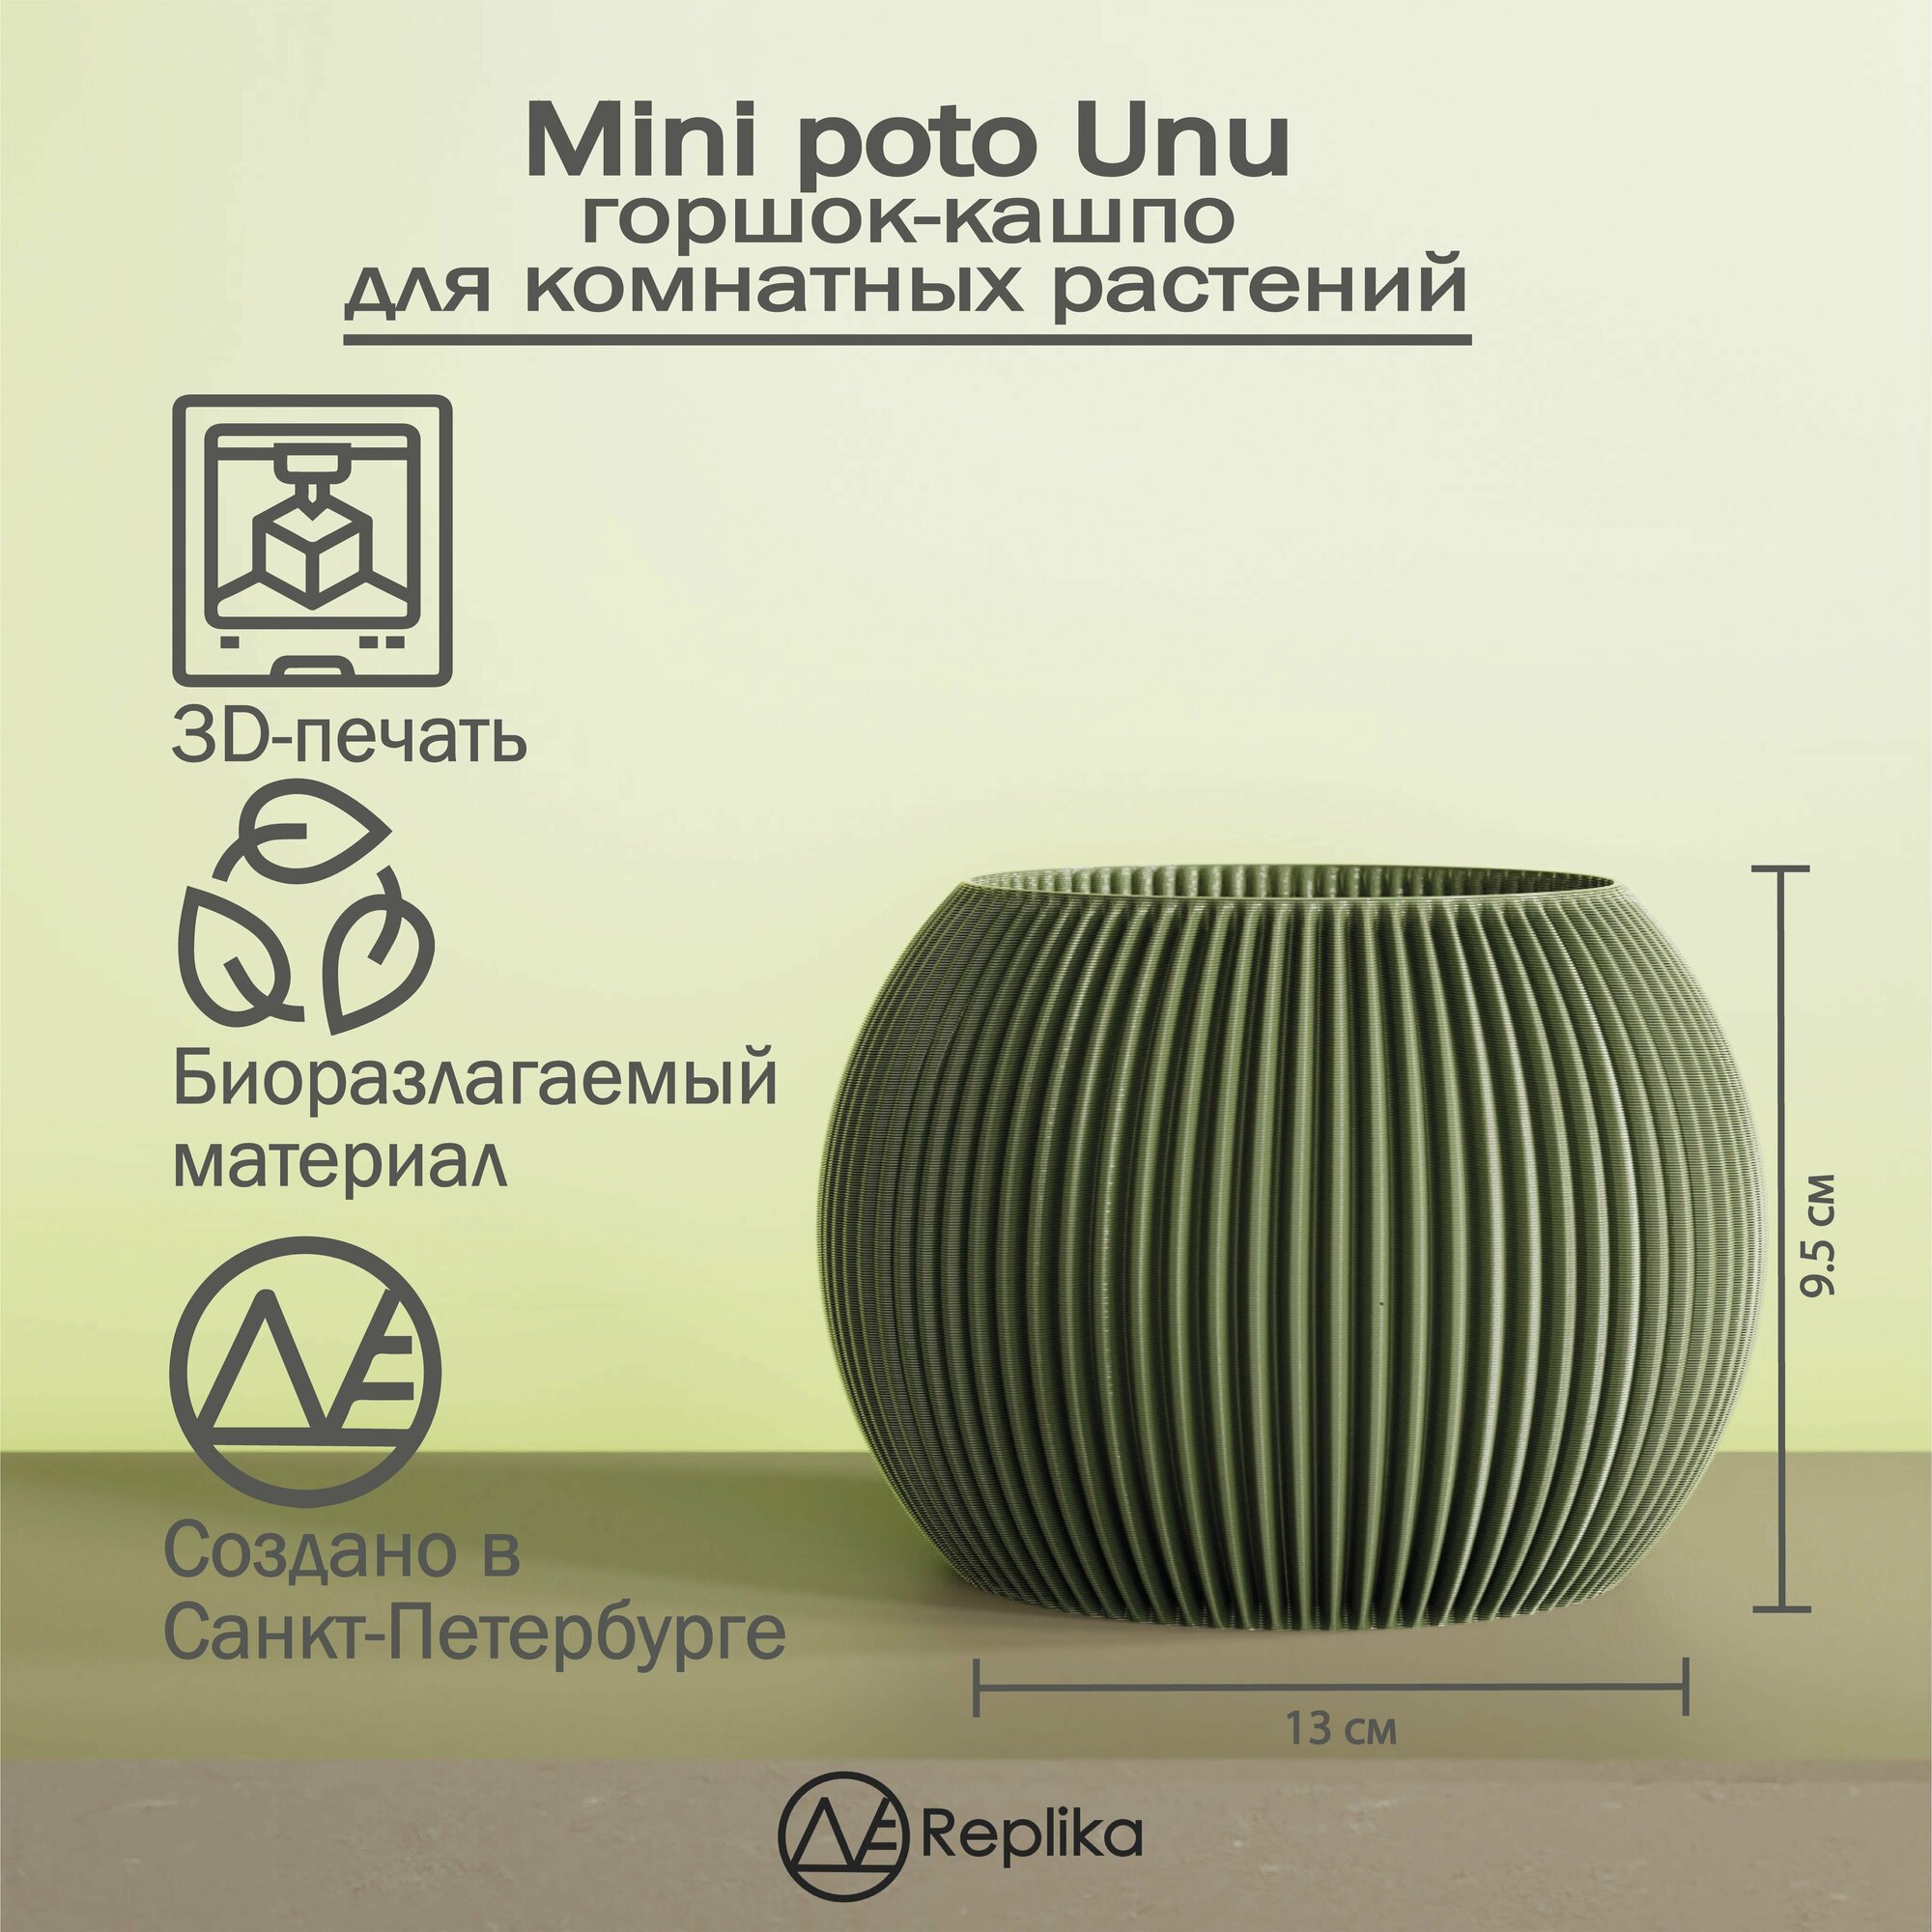 Mini poto Unu горшок-кашпо для цветов и сухоцветов